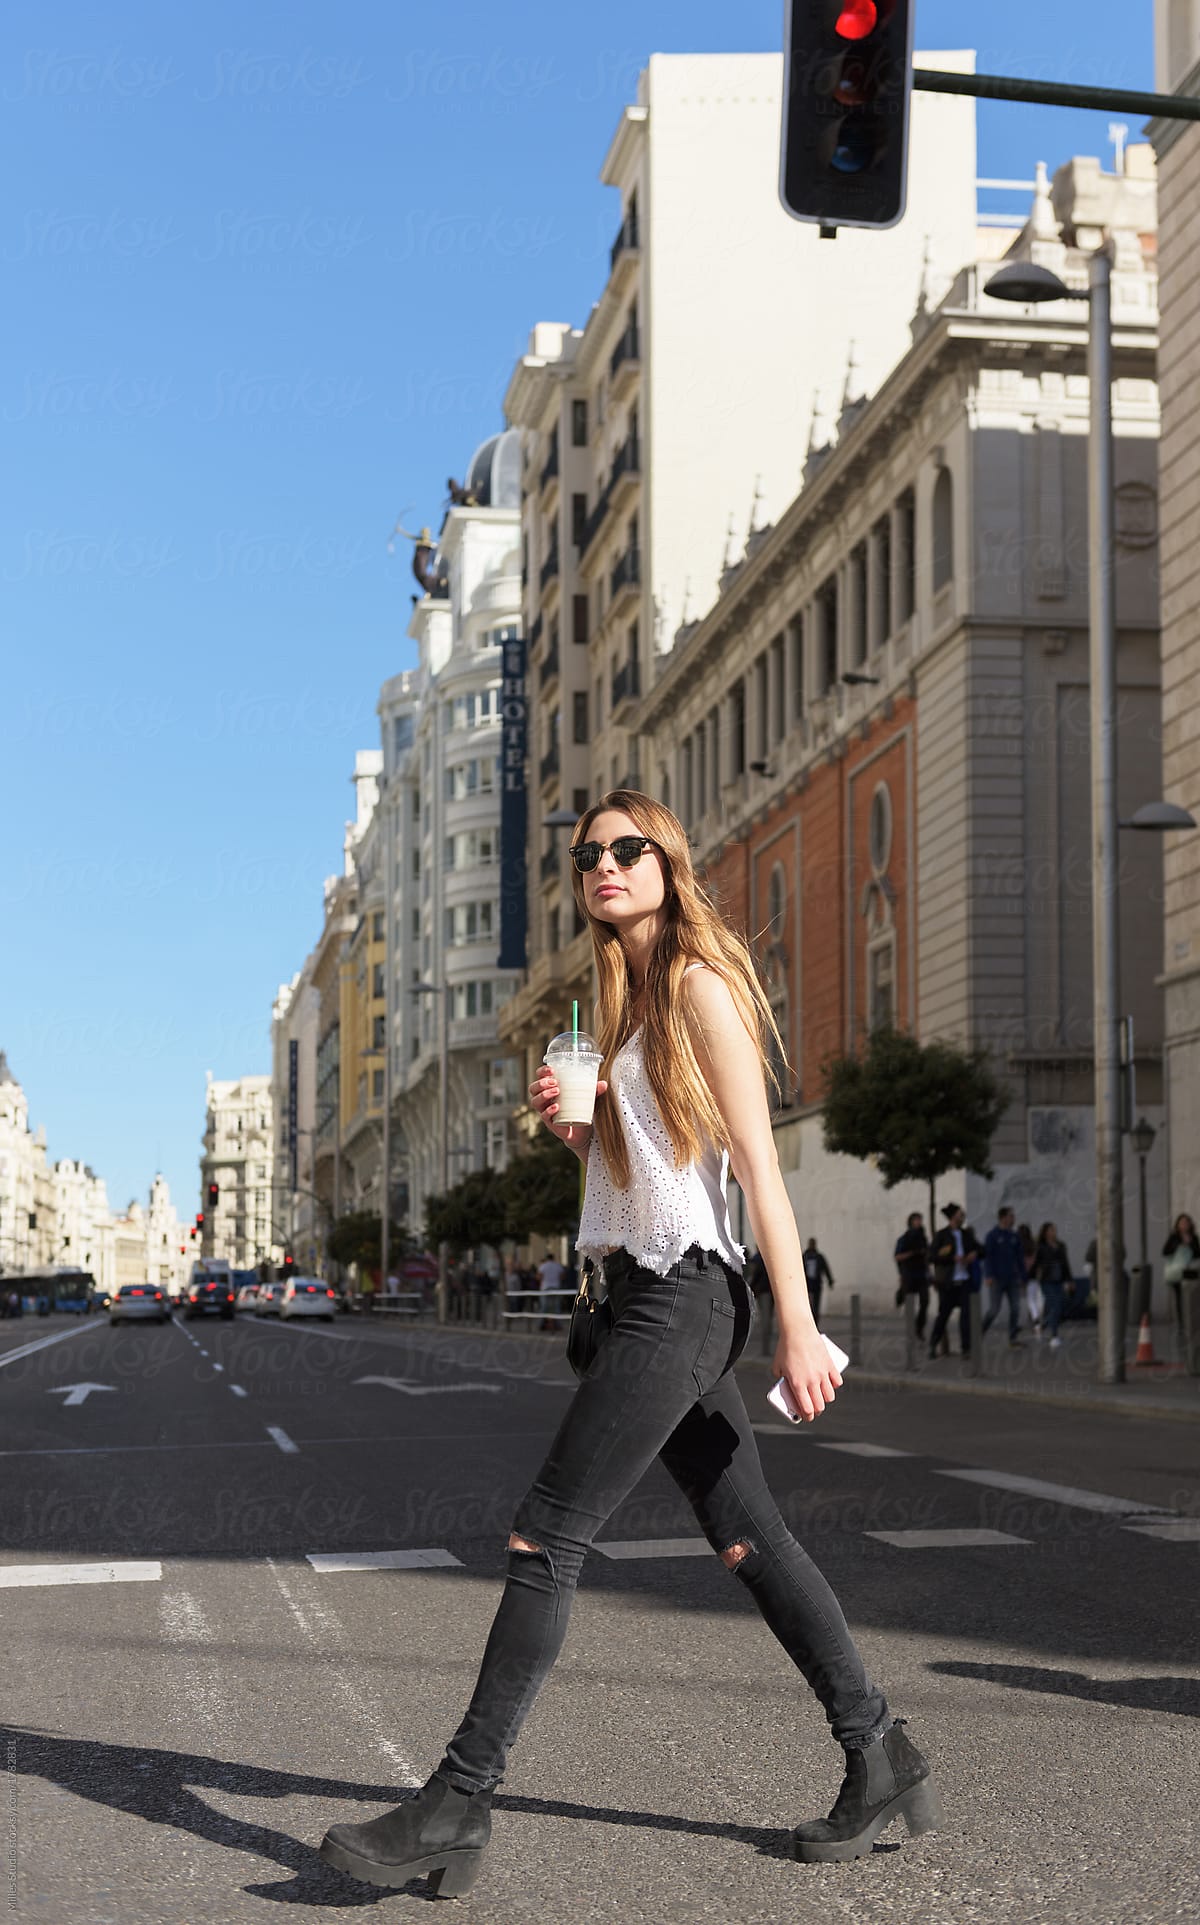 Stylish Girl Walking On Street by Stocksy Contributor Milles Studio -  Stocksy